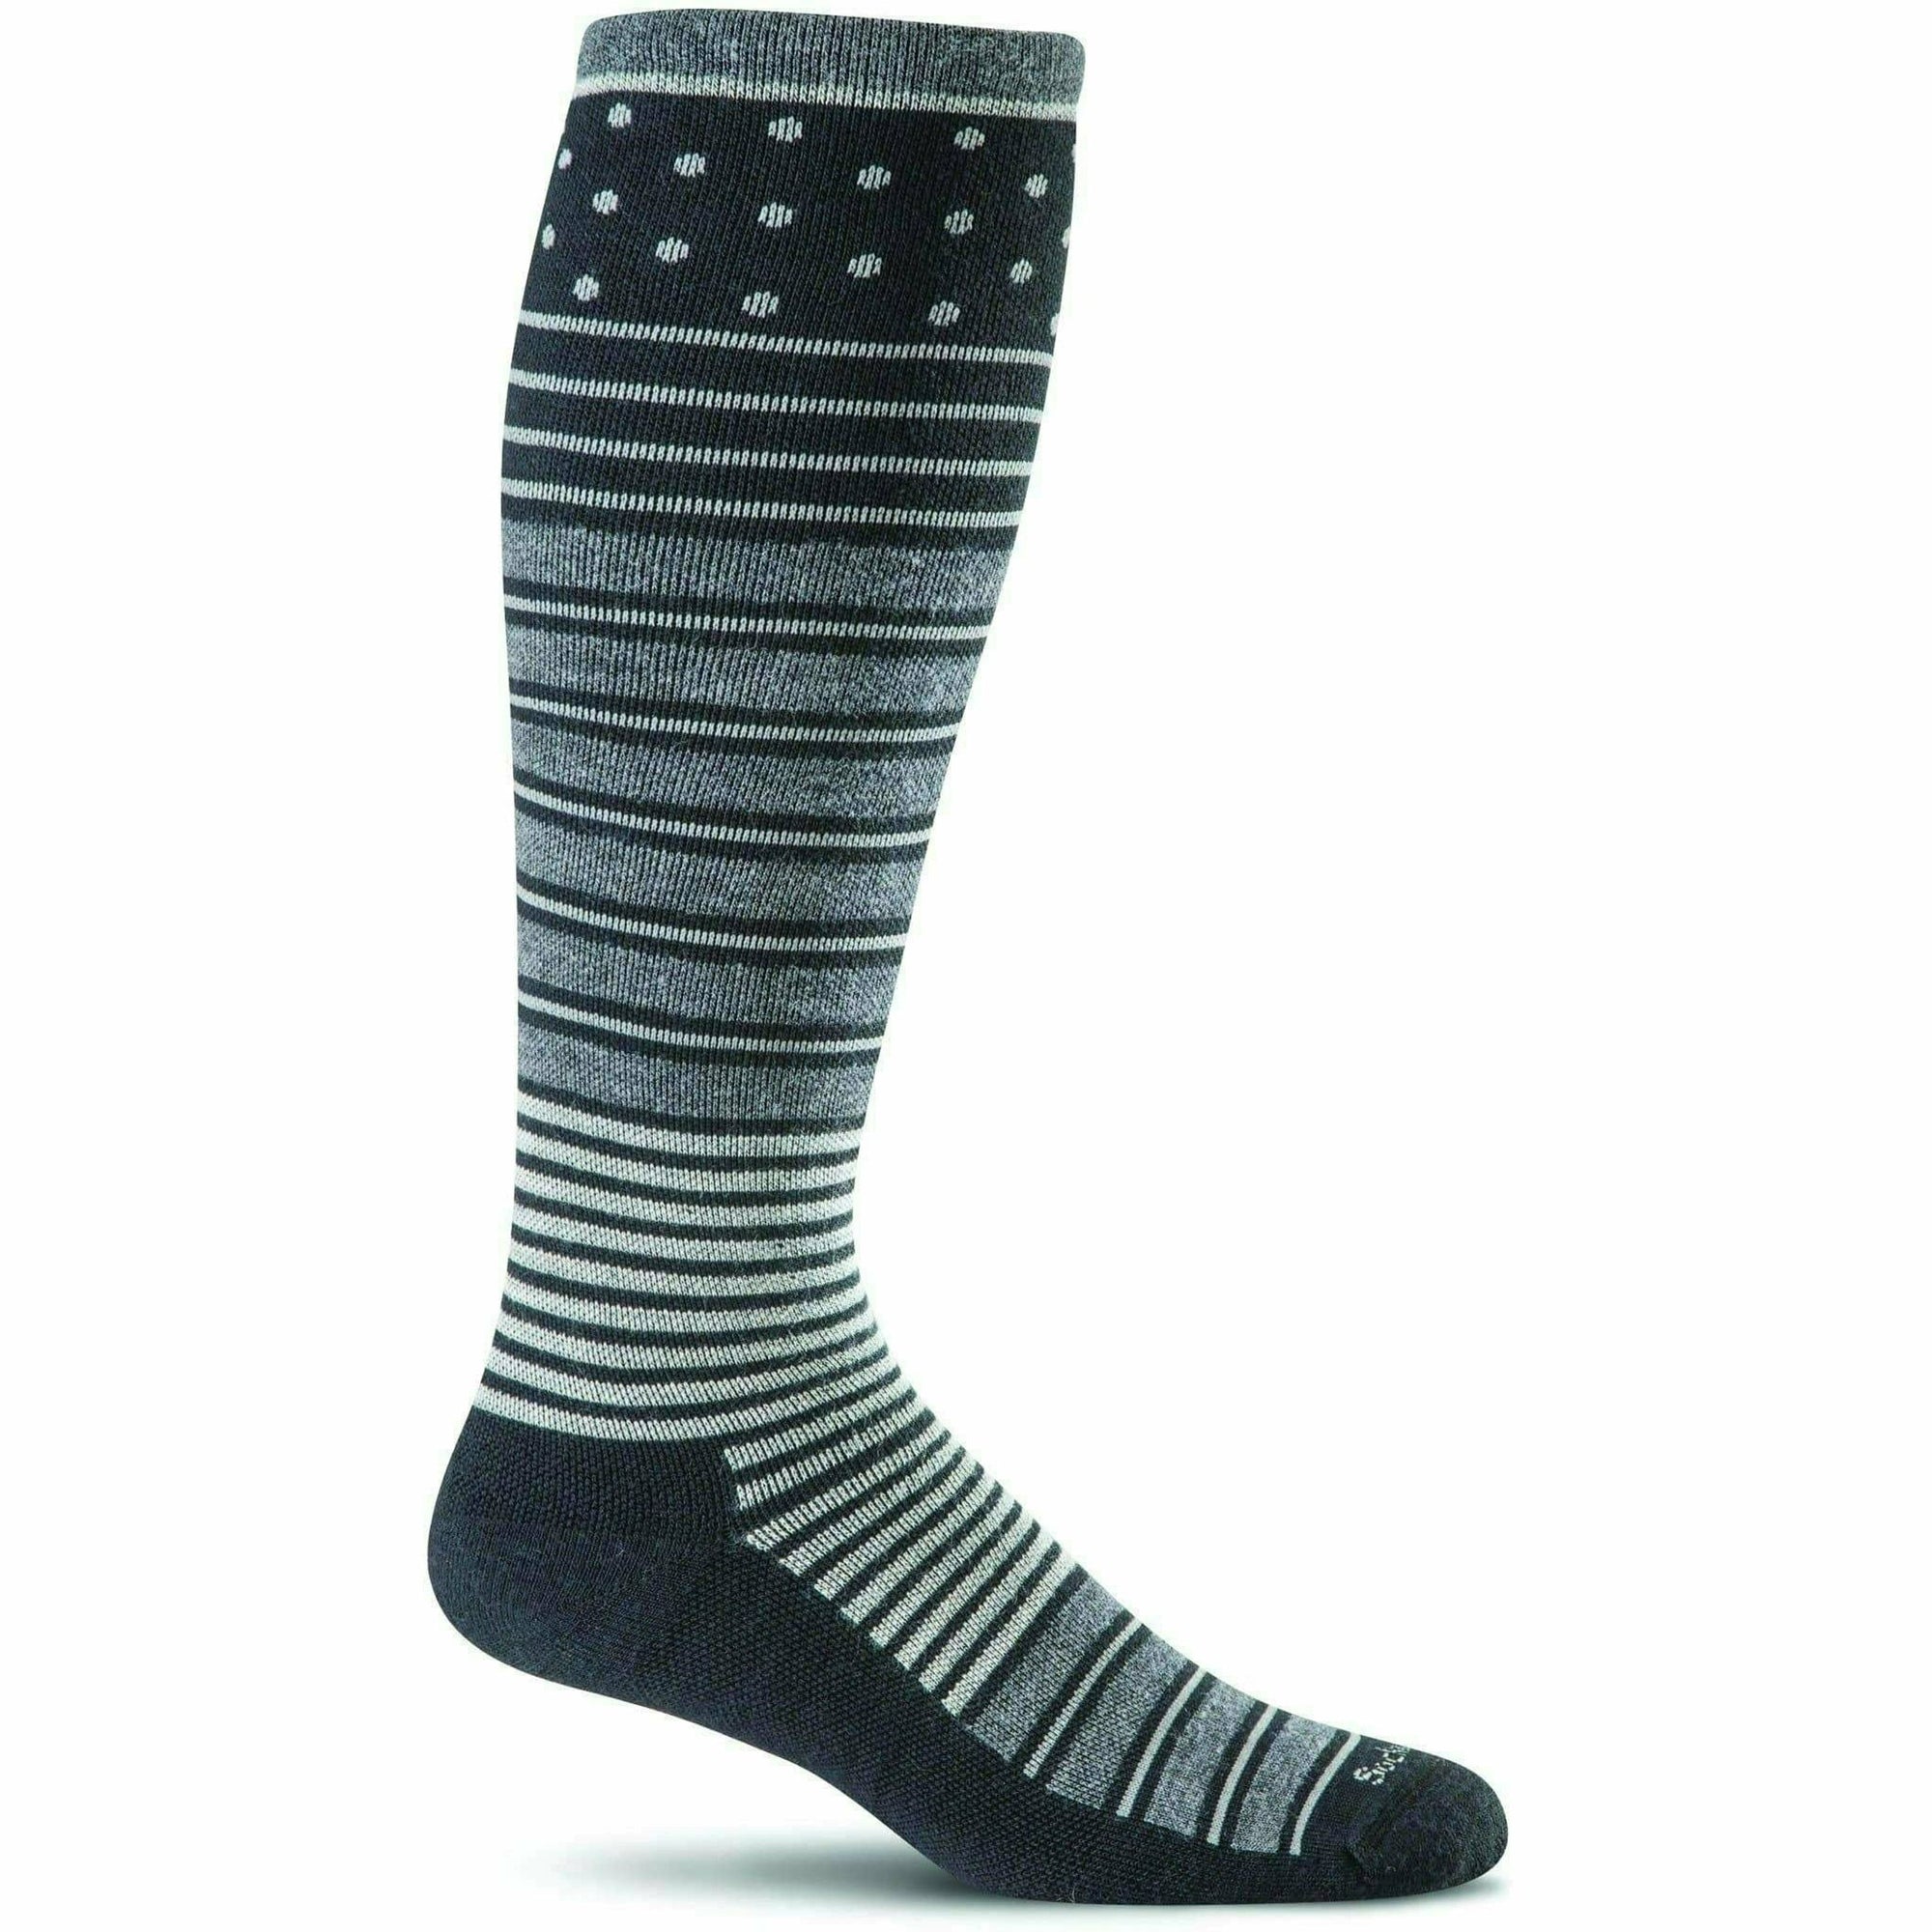 Sockwell Womens Twister Firm Compression Knee High Socks | GoBros.com